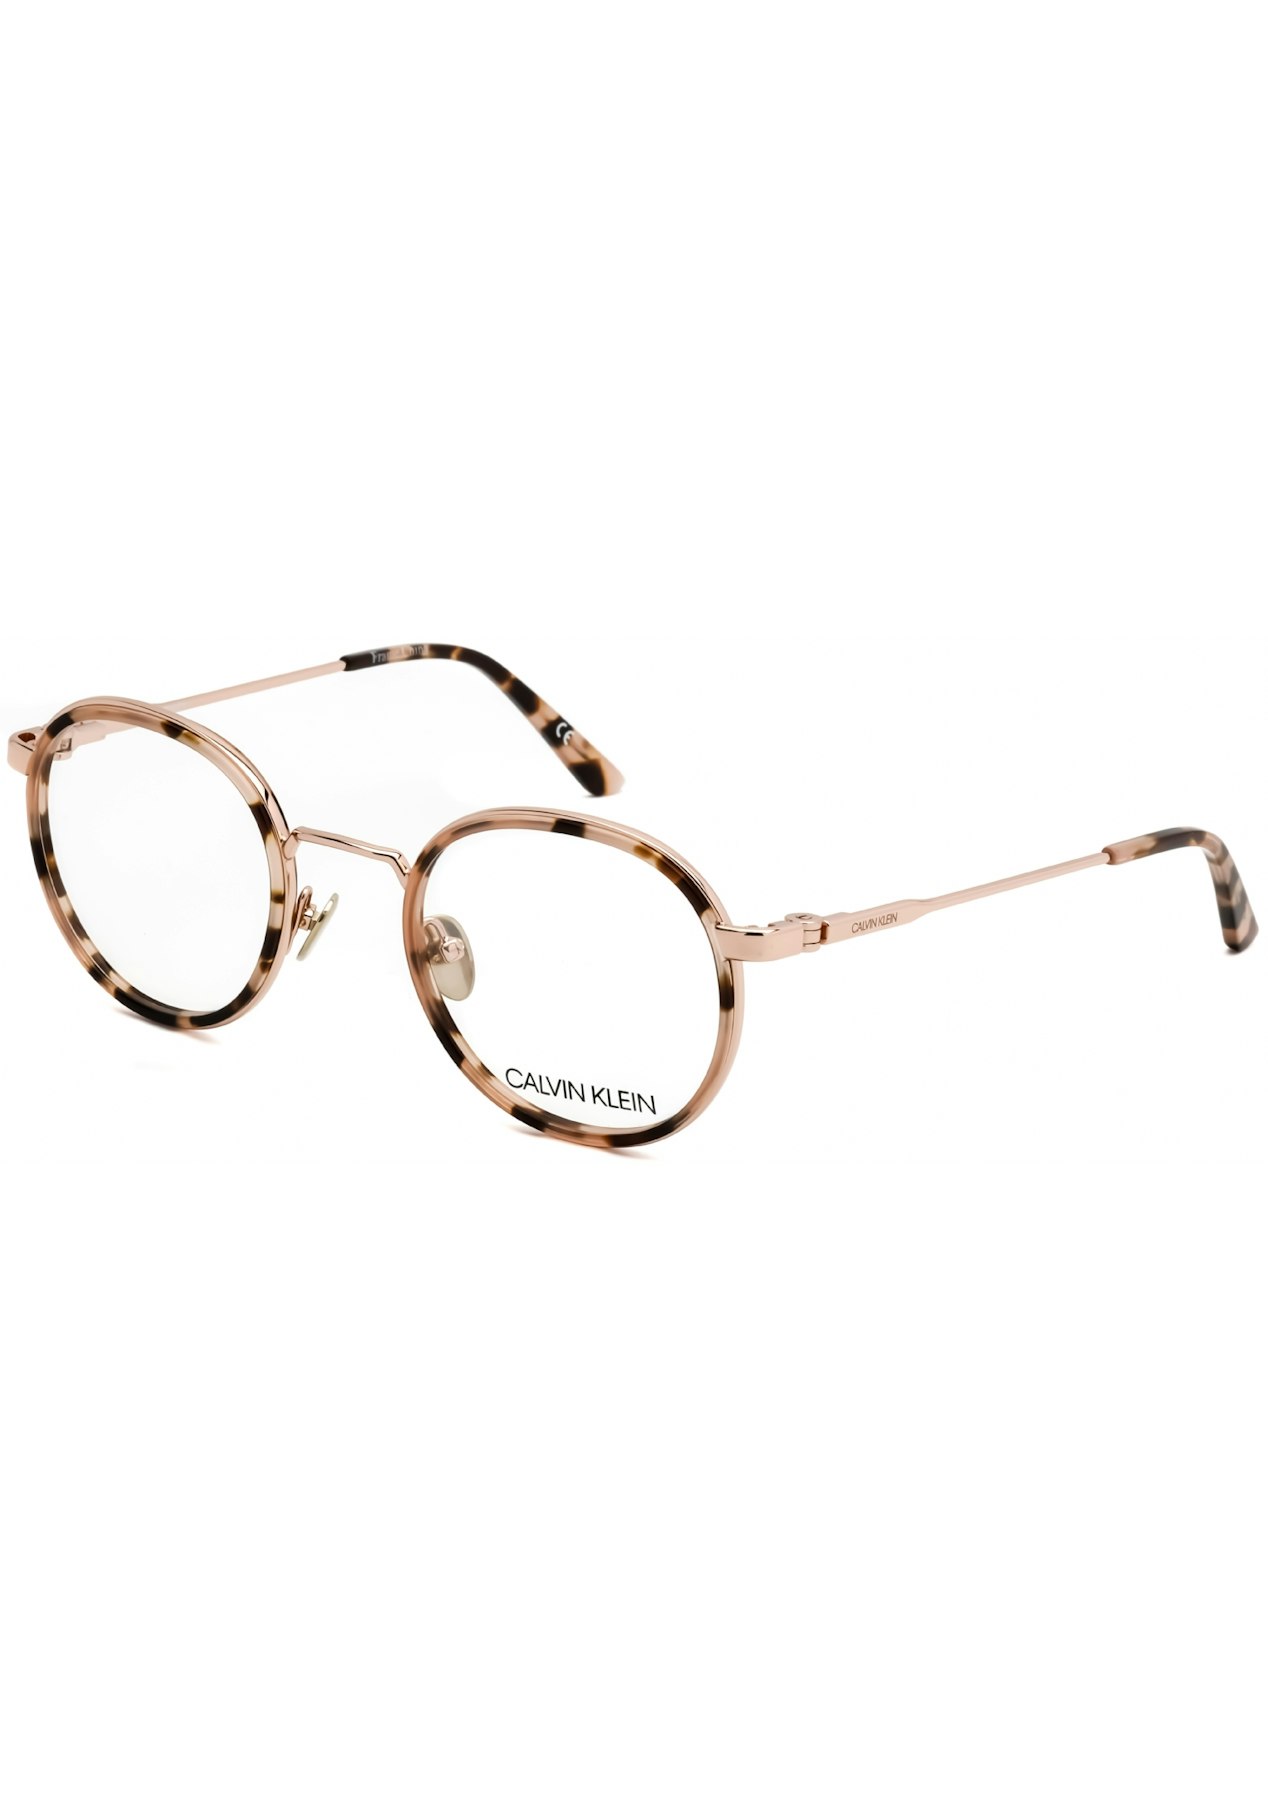 Calvin Klein CK18107 Eyeglasses Peach Tortoise / Clear Lens - Onceit